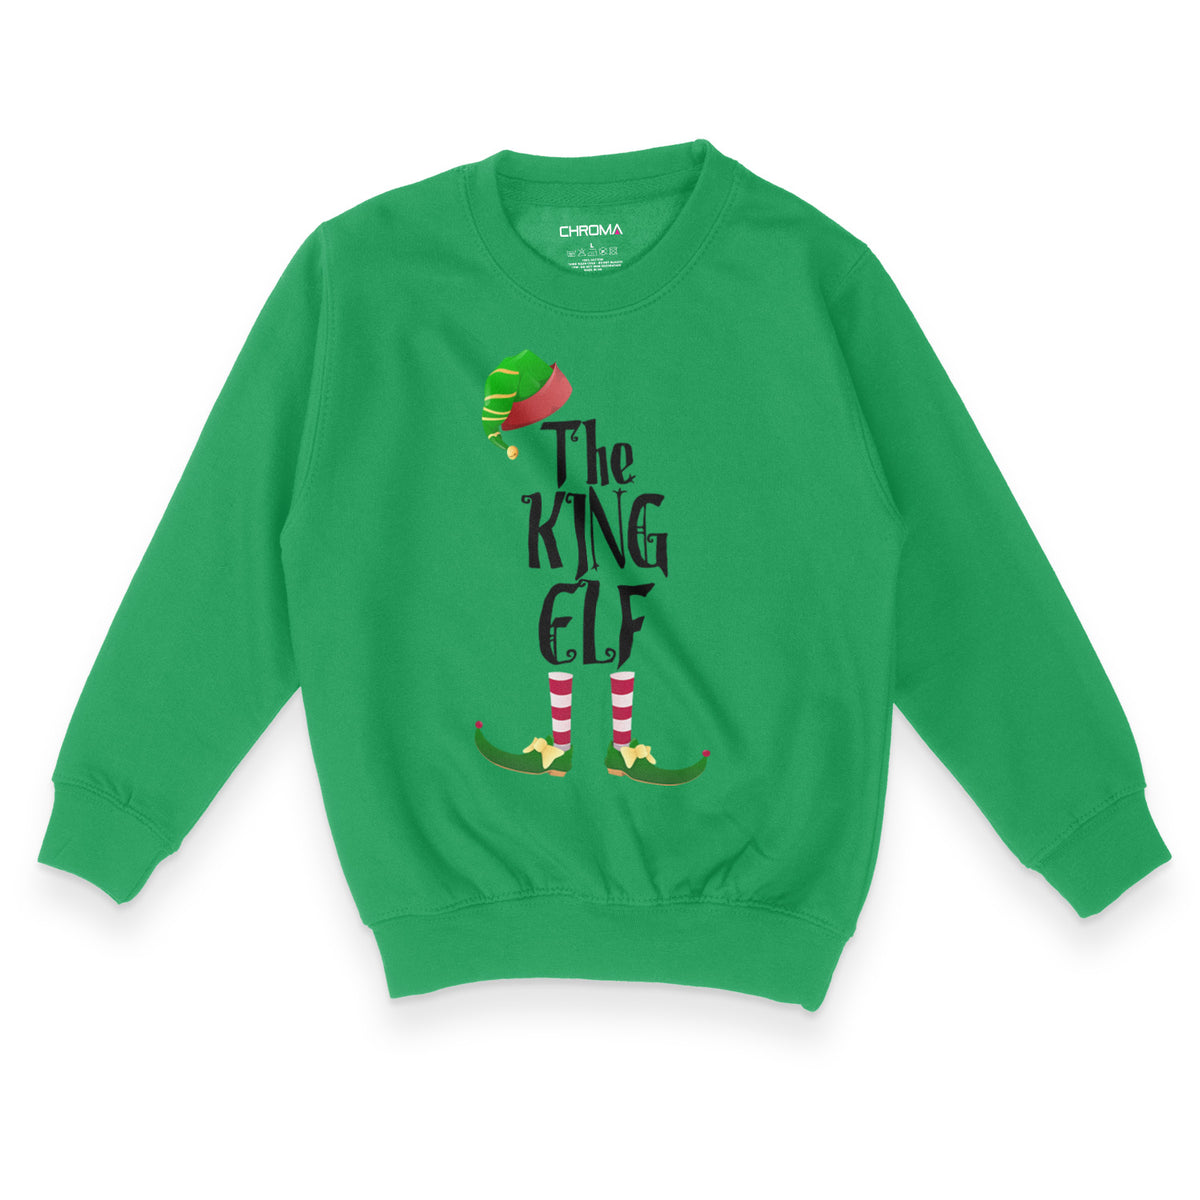 The King Elf Festive Fun | Kid's Christmas Sweatshirt Chroma Clothing